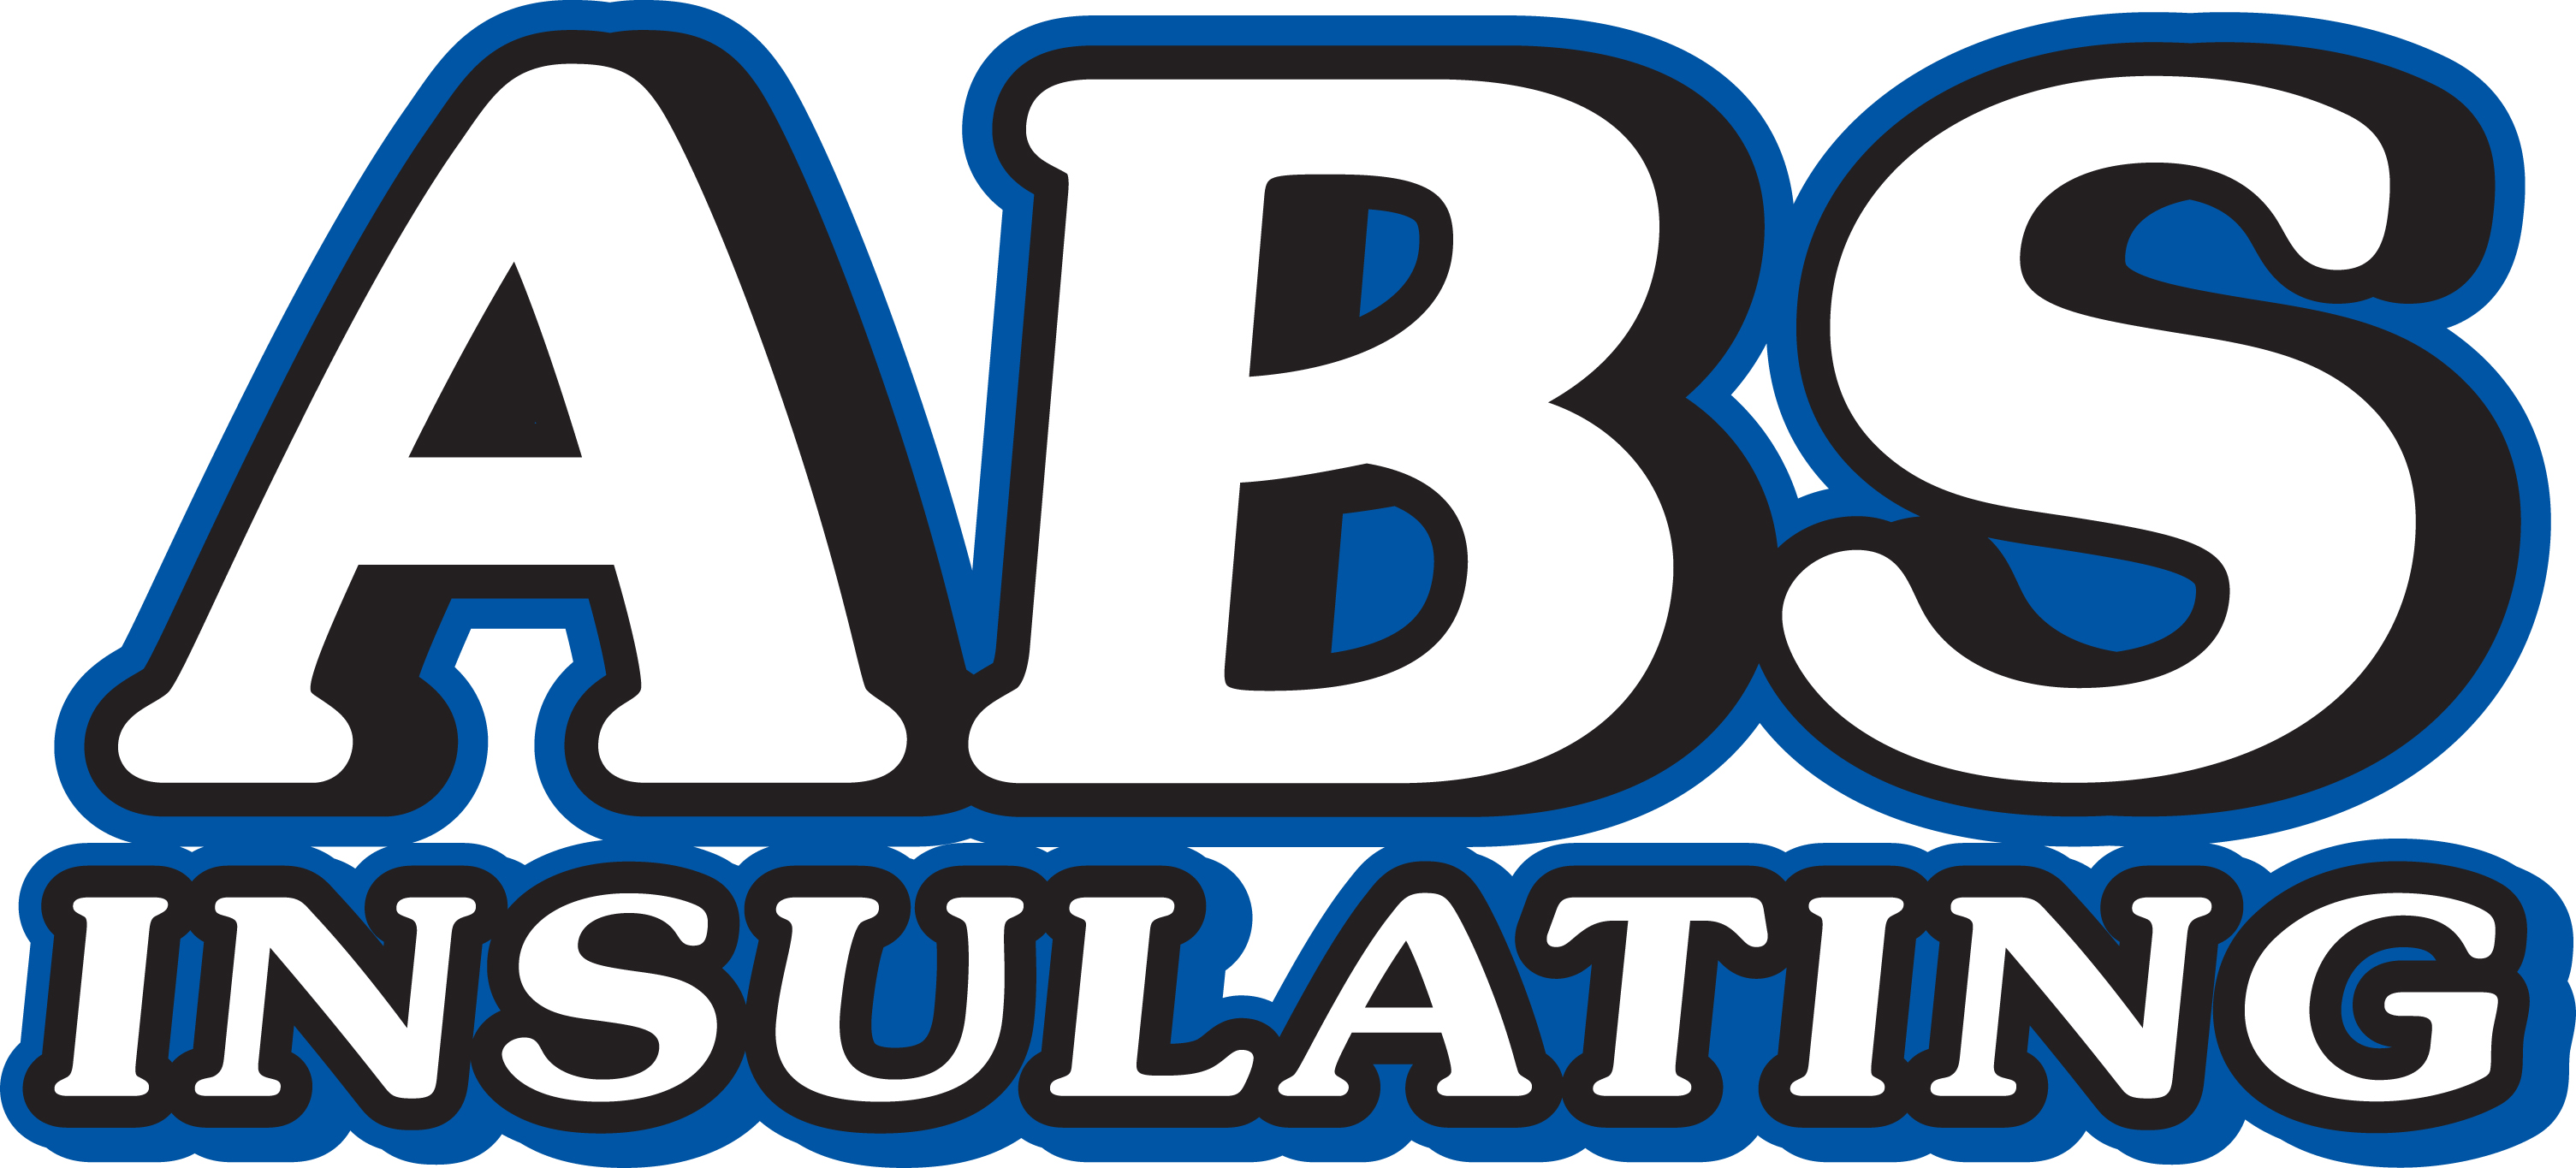 ABS Insulating Logo